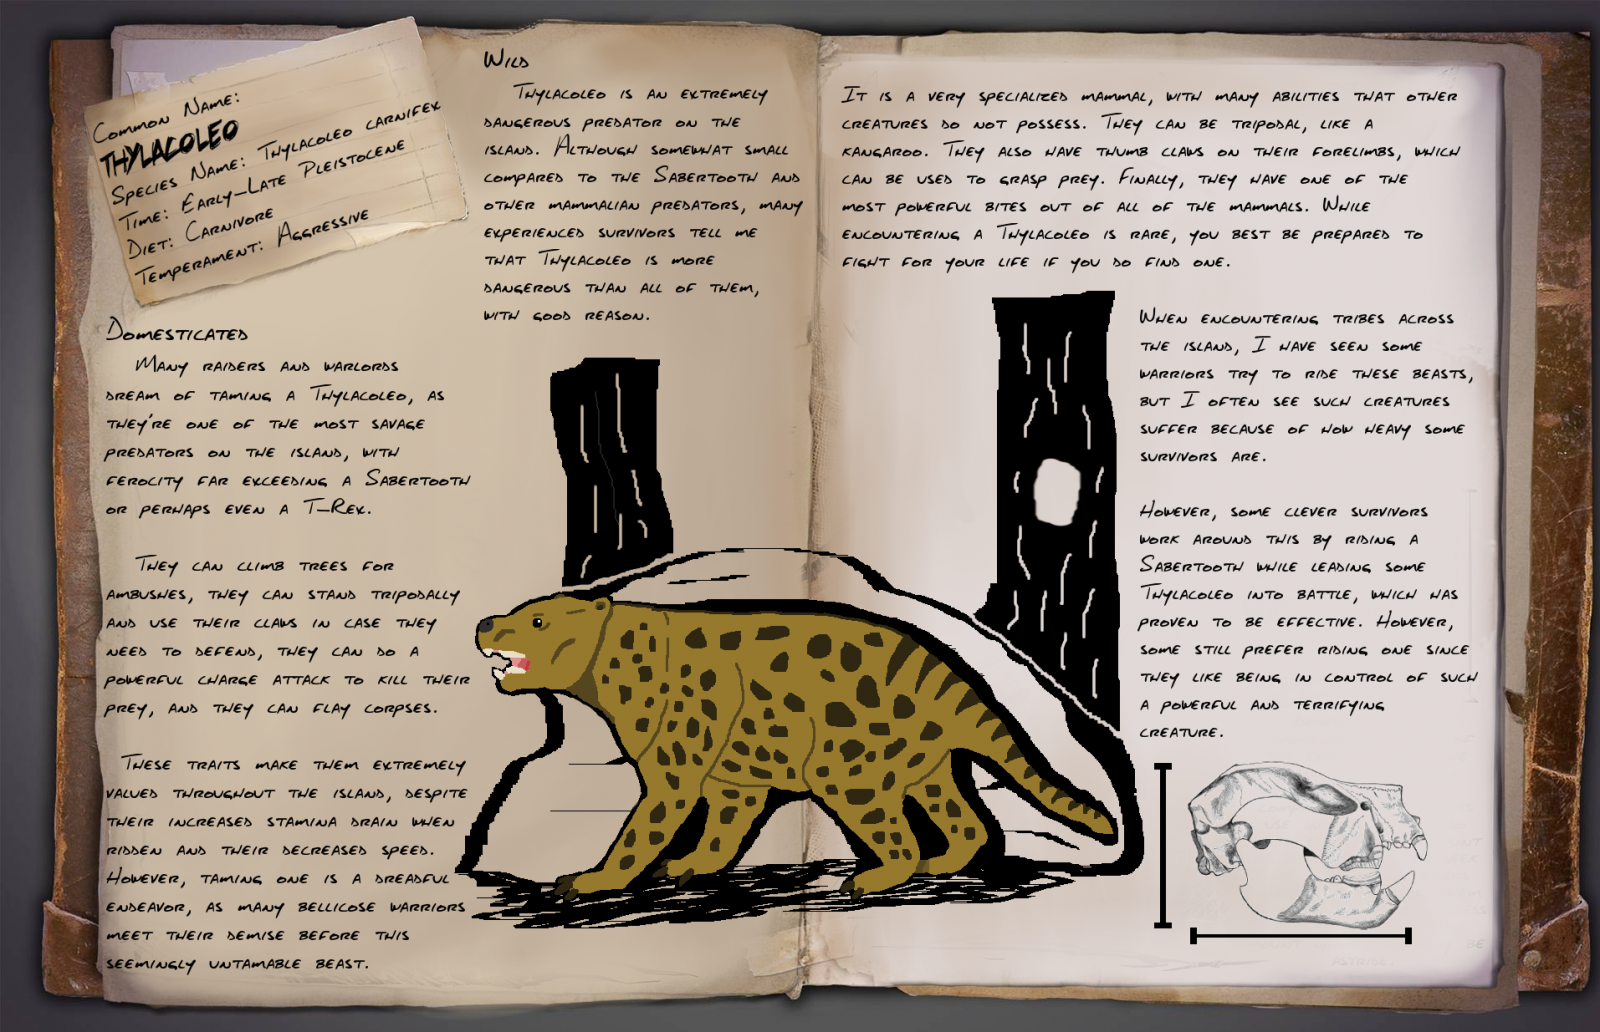 Deinonychus - ARK: Survival Evolved Wiki